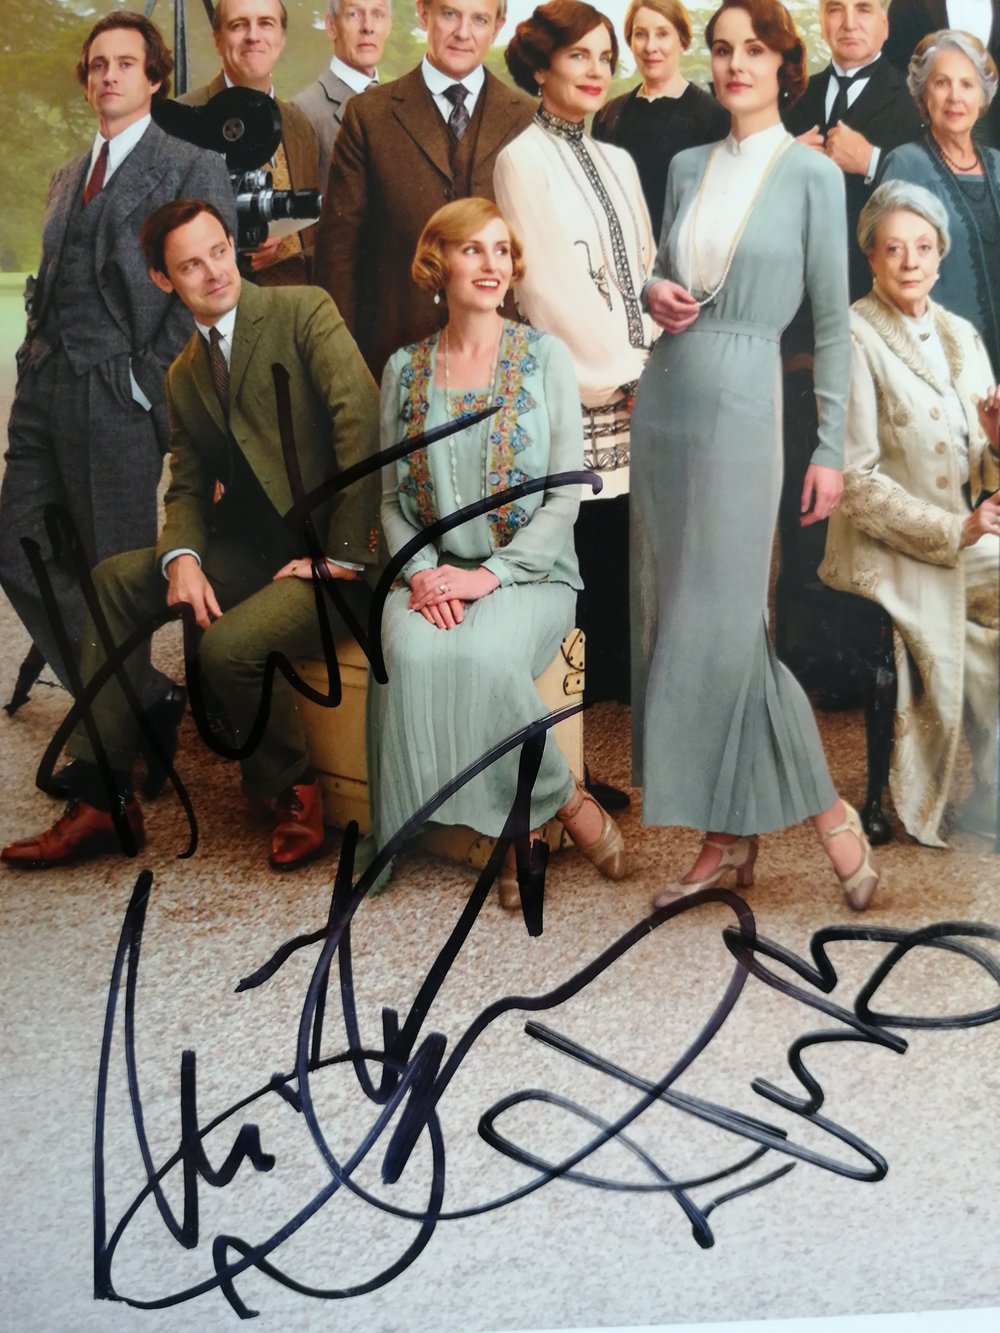 Downton Abbey Multi Cast Signed 10x8